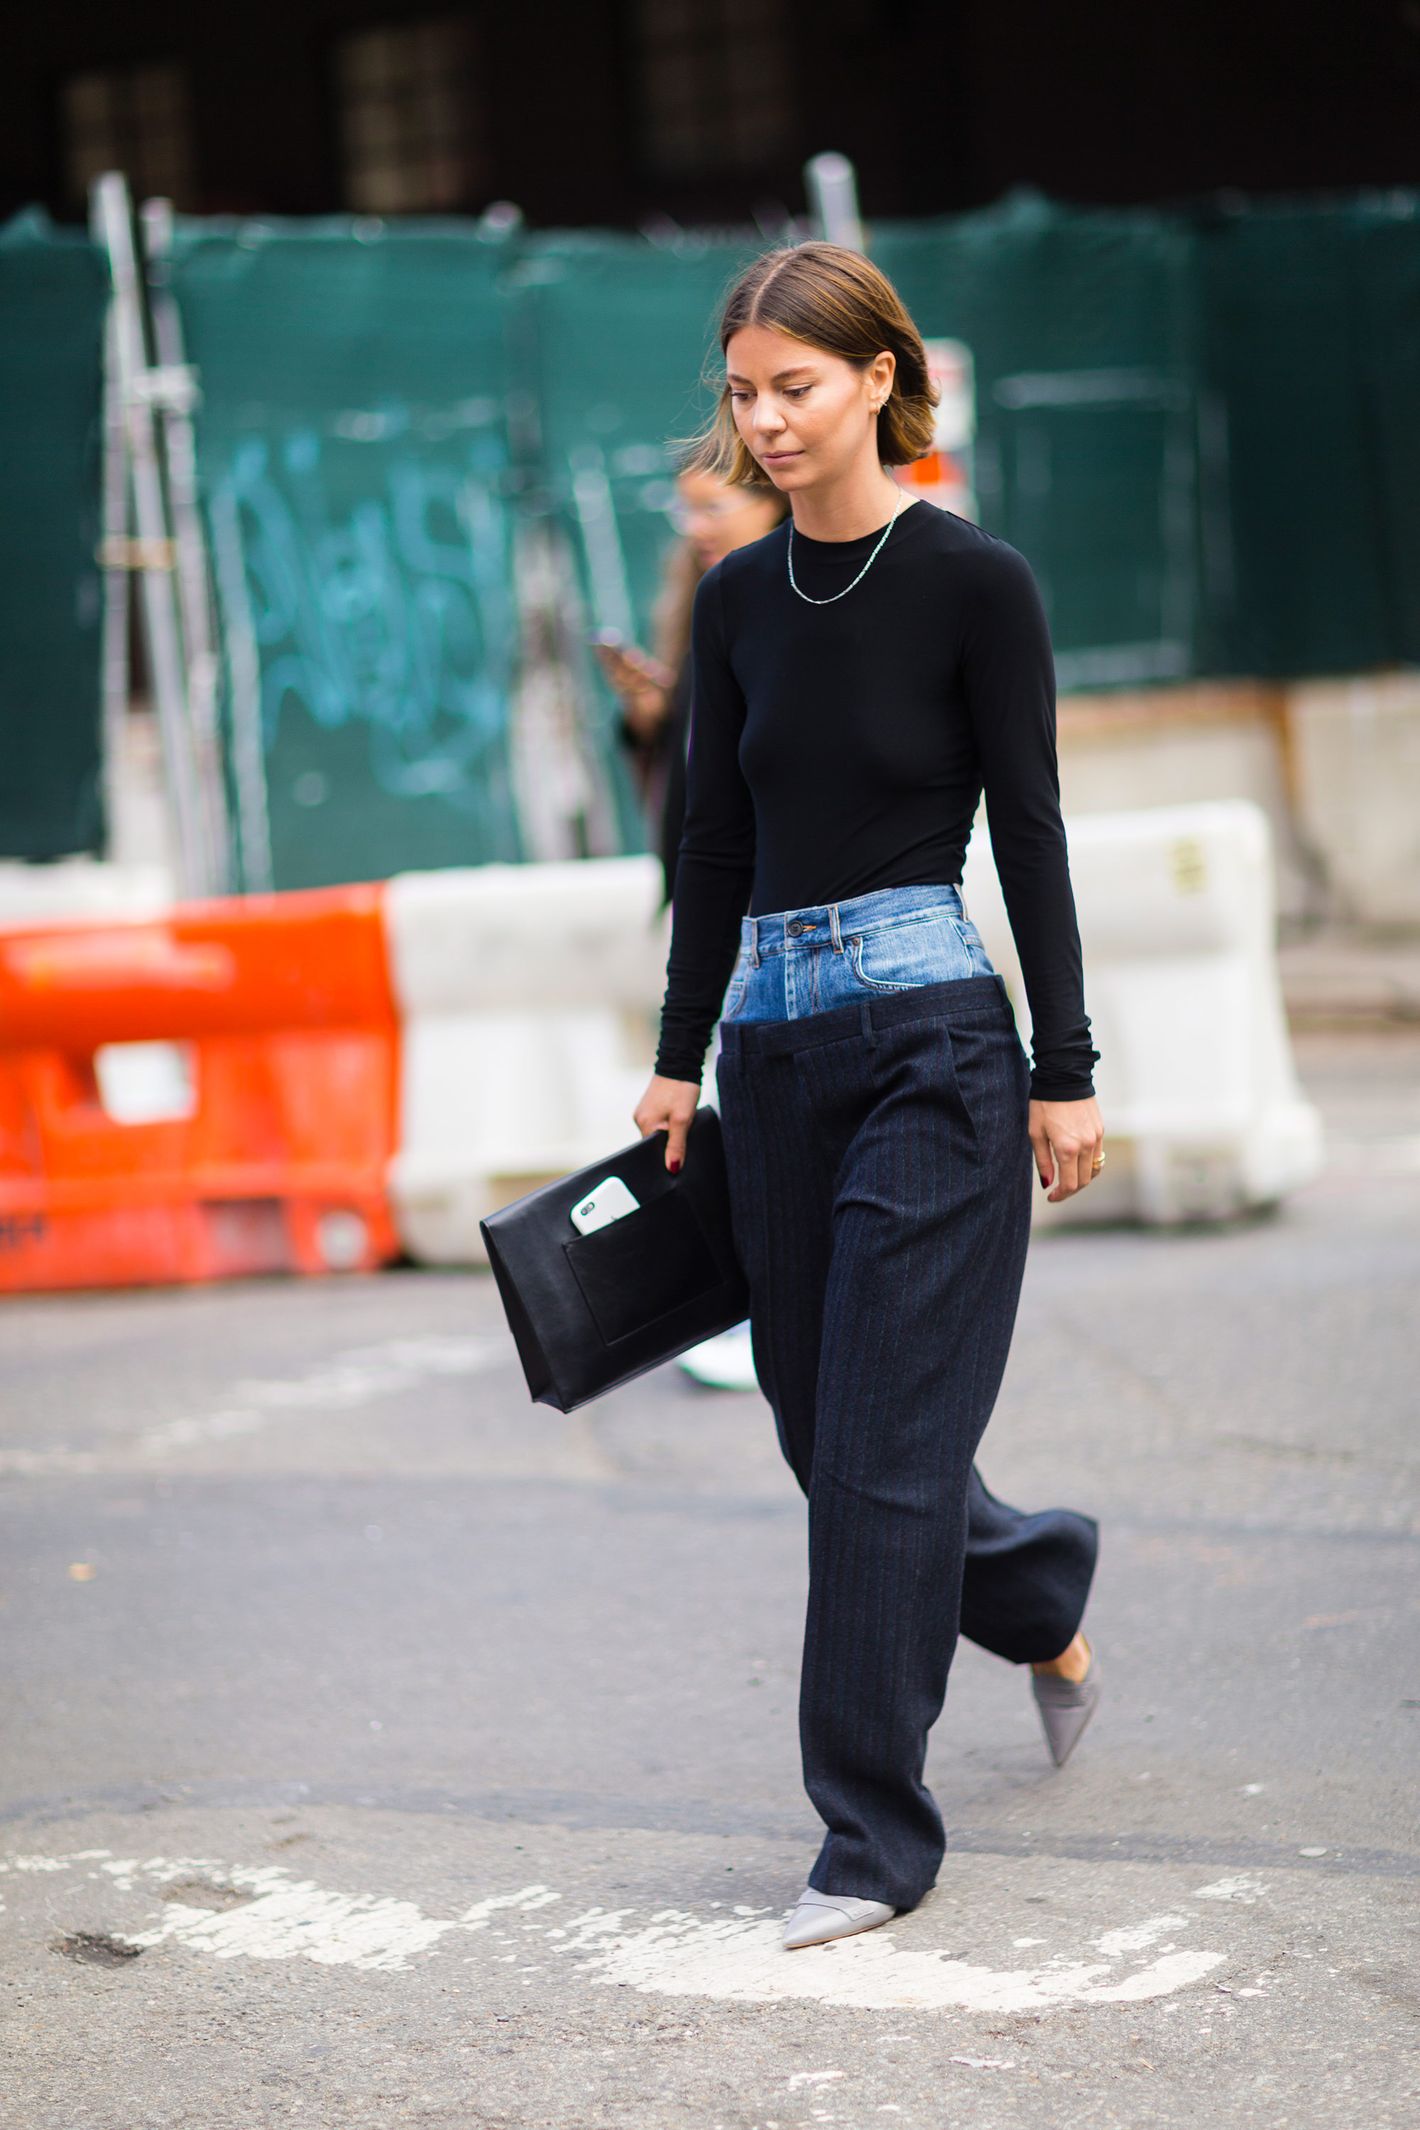 Most Popular PFW Street Style Look: Margiela's Double Pants